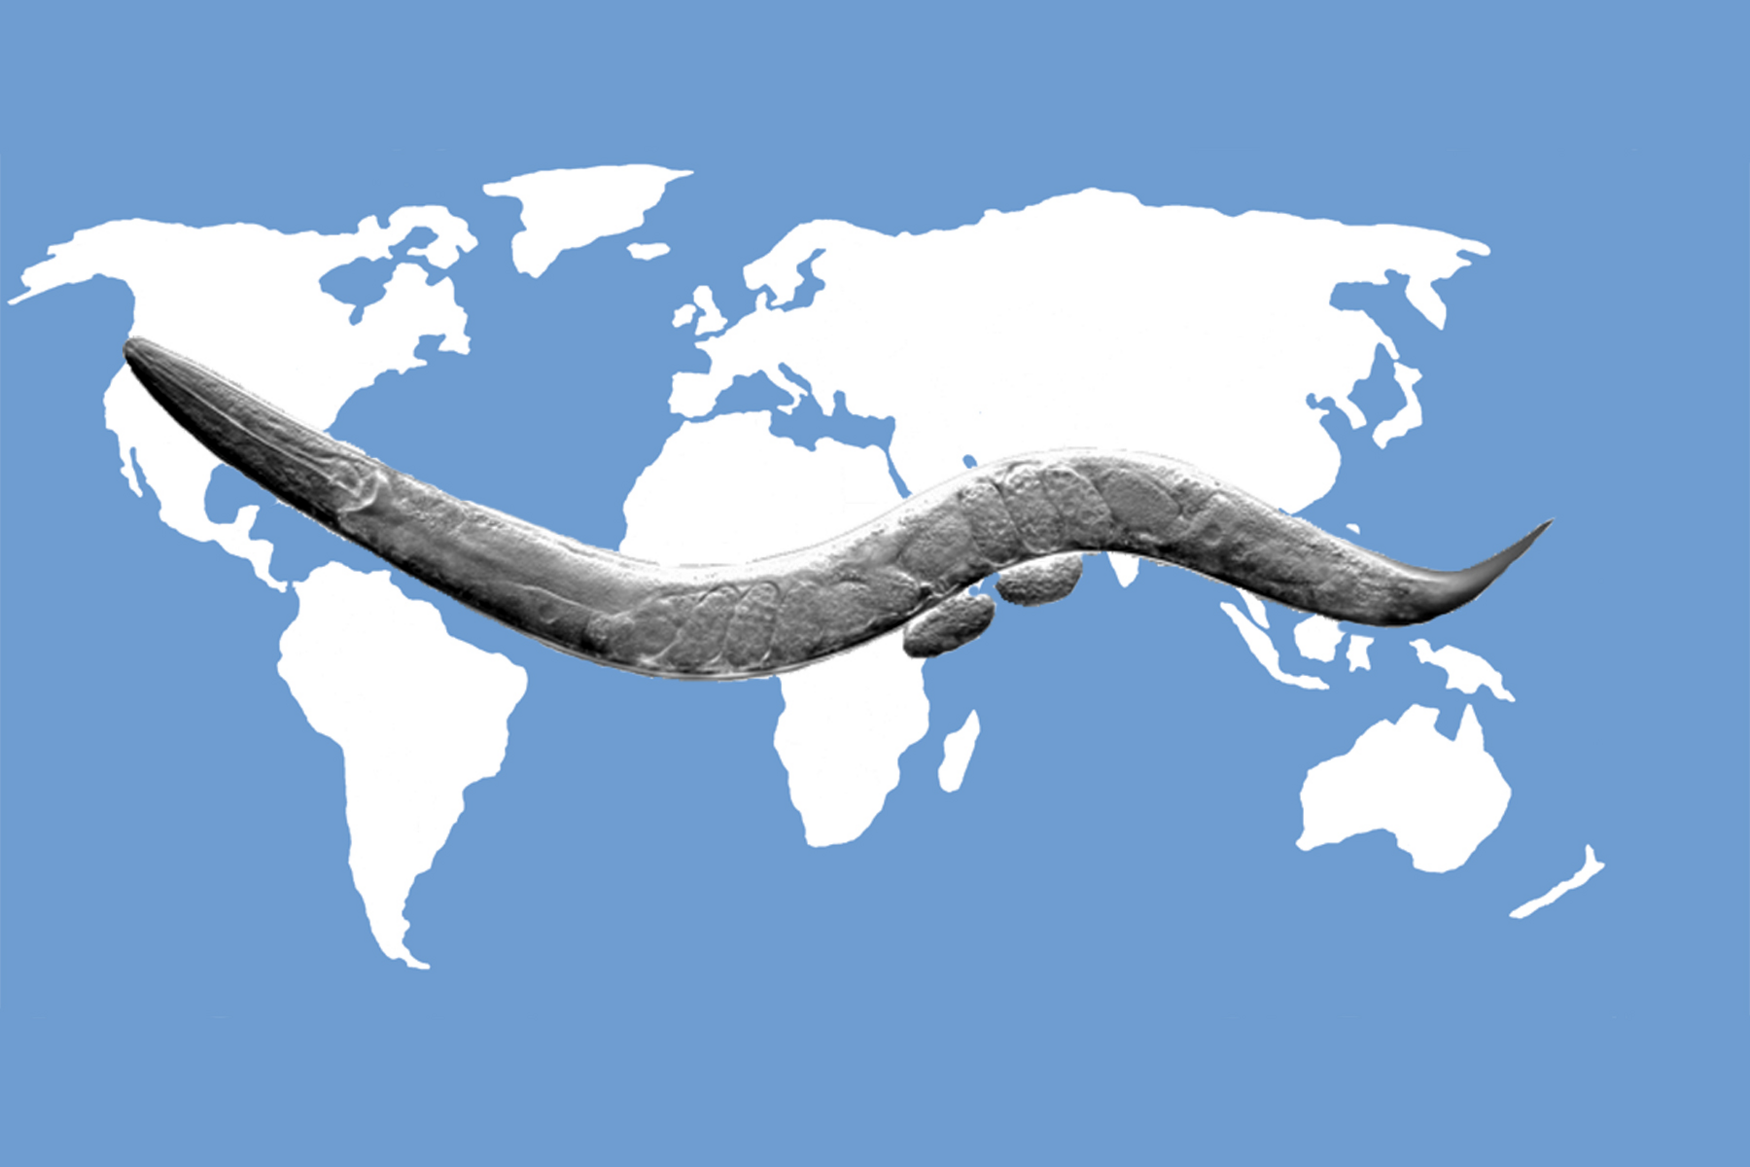 nematode worm overlaid over the world map